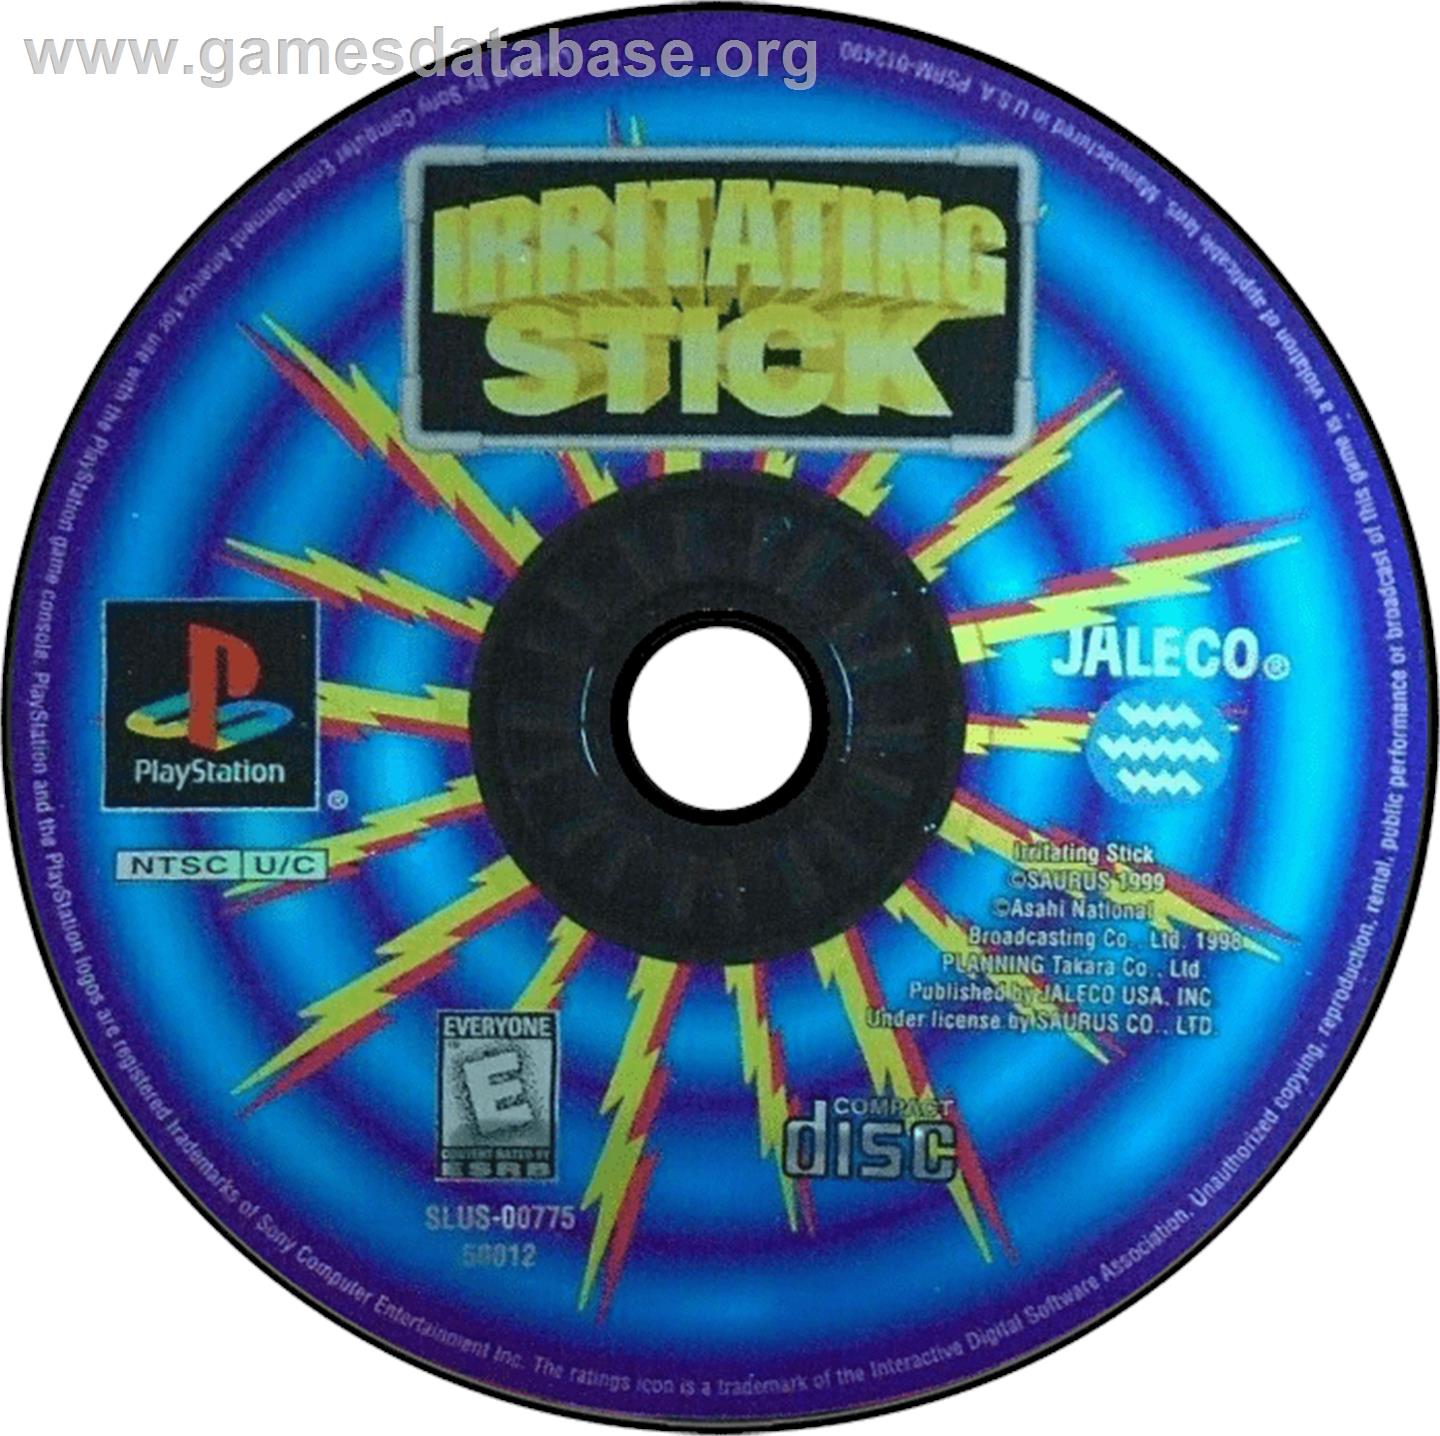 Irritating Stick - Sony Playstation - Artwork - Disc